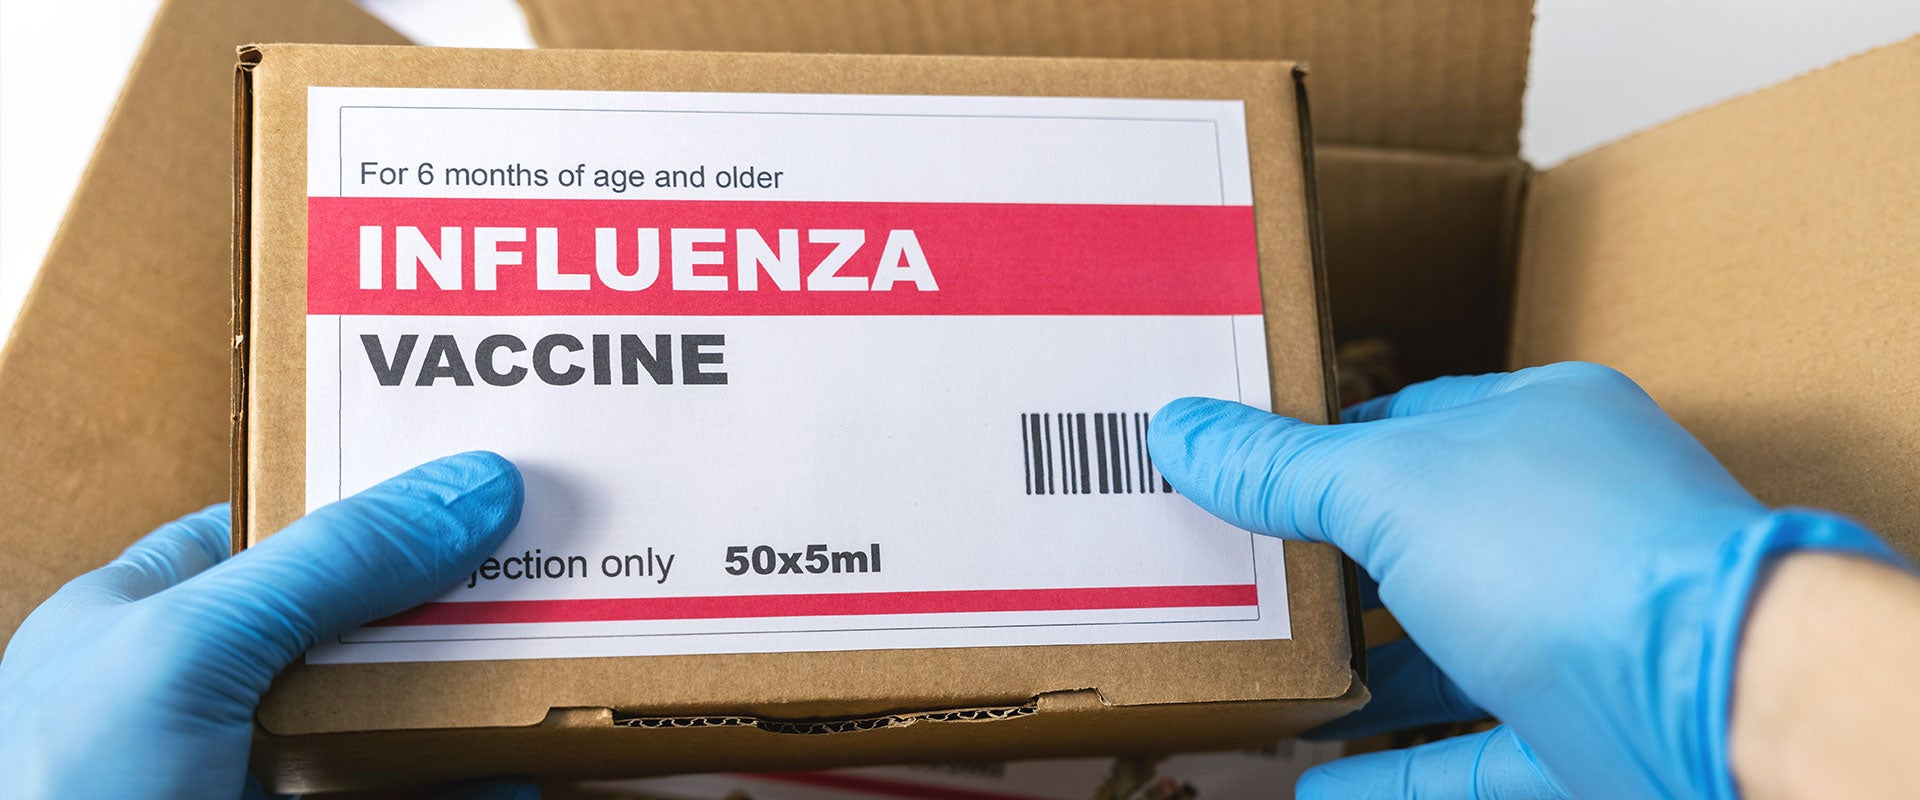 box of flu vaccines